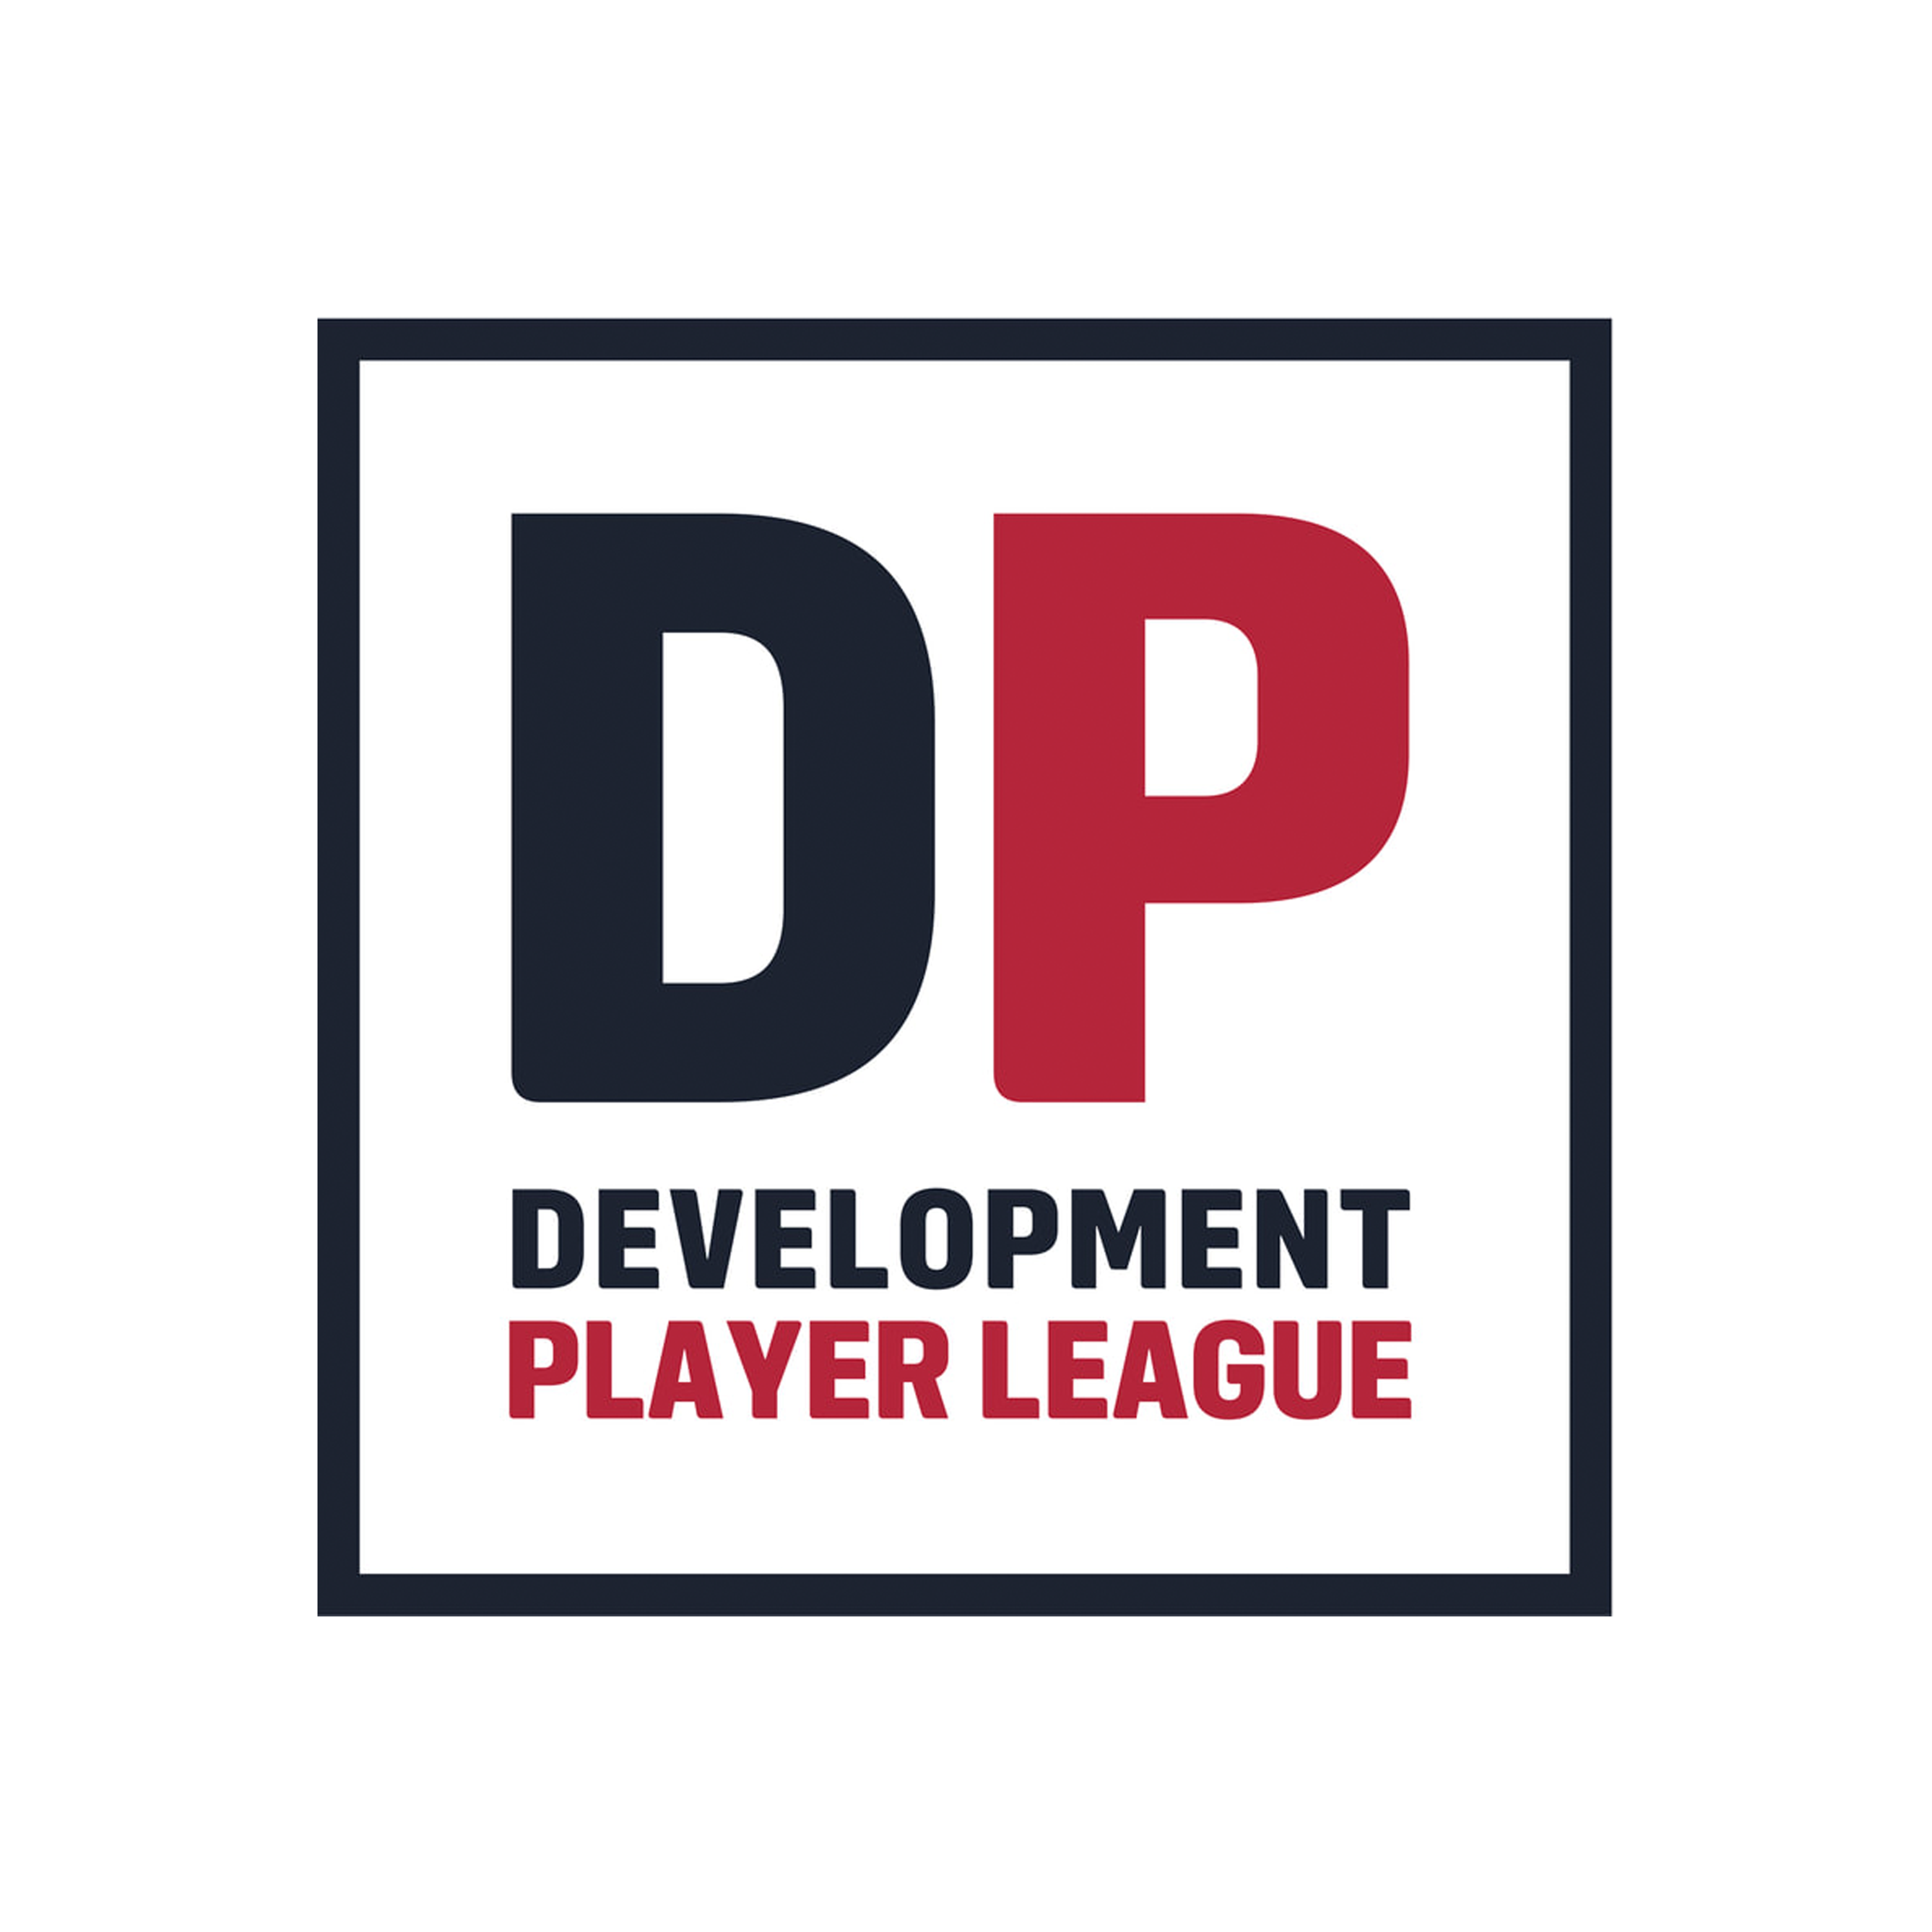 Development Player League